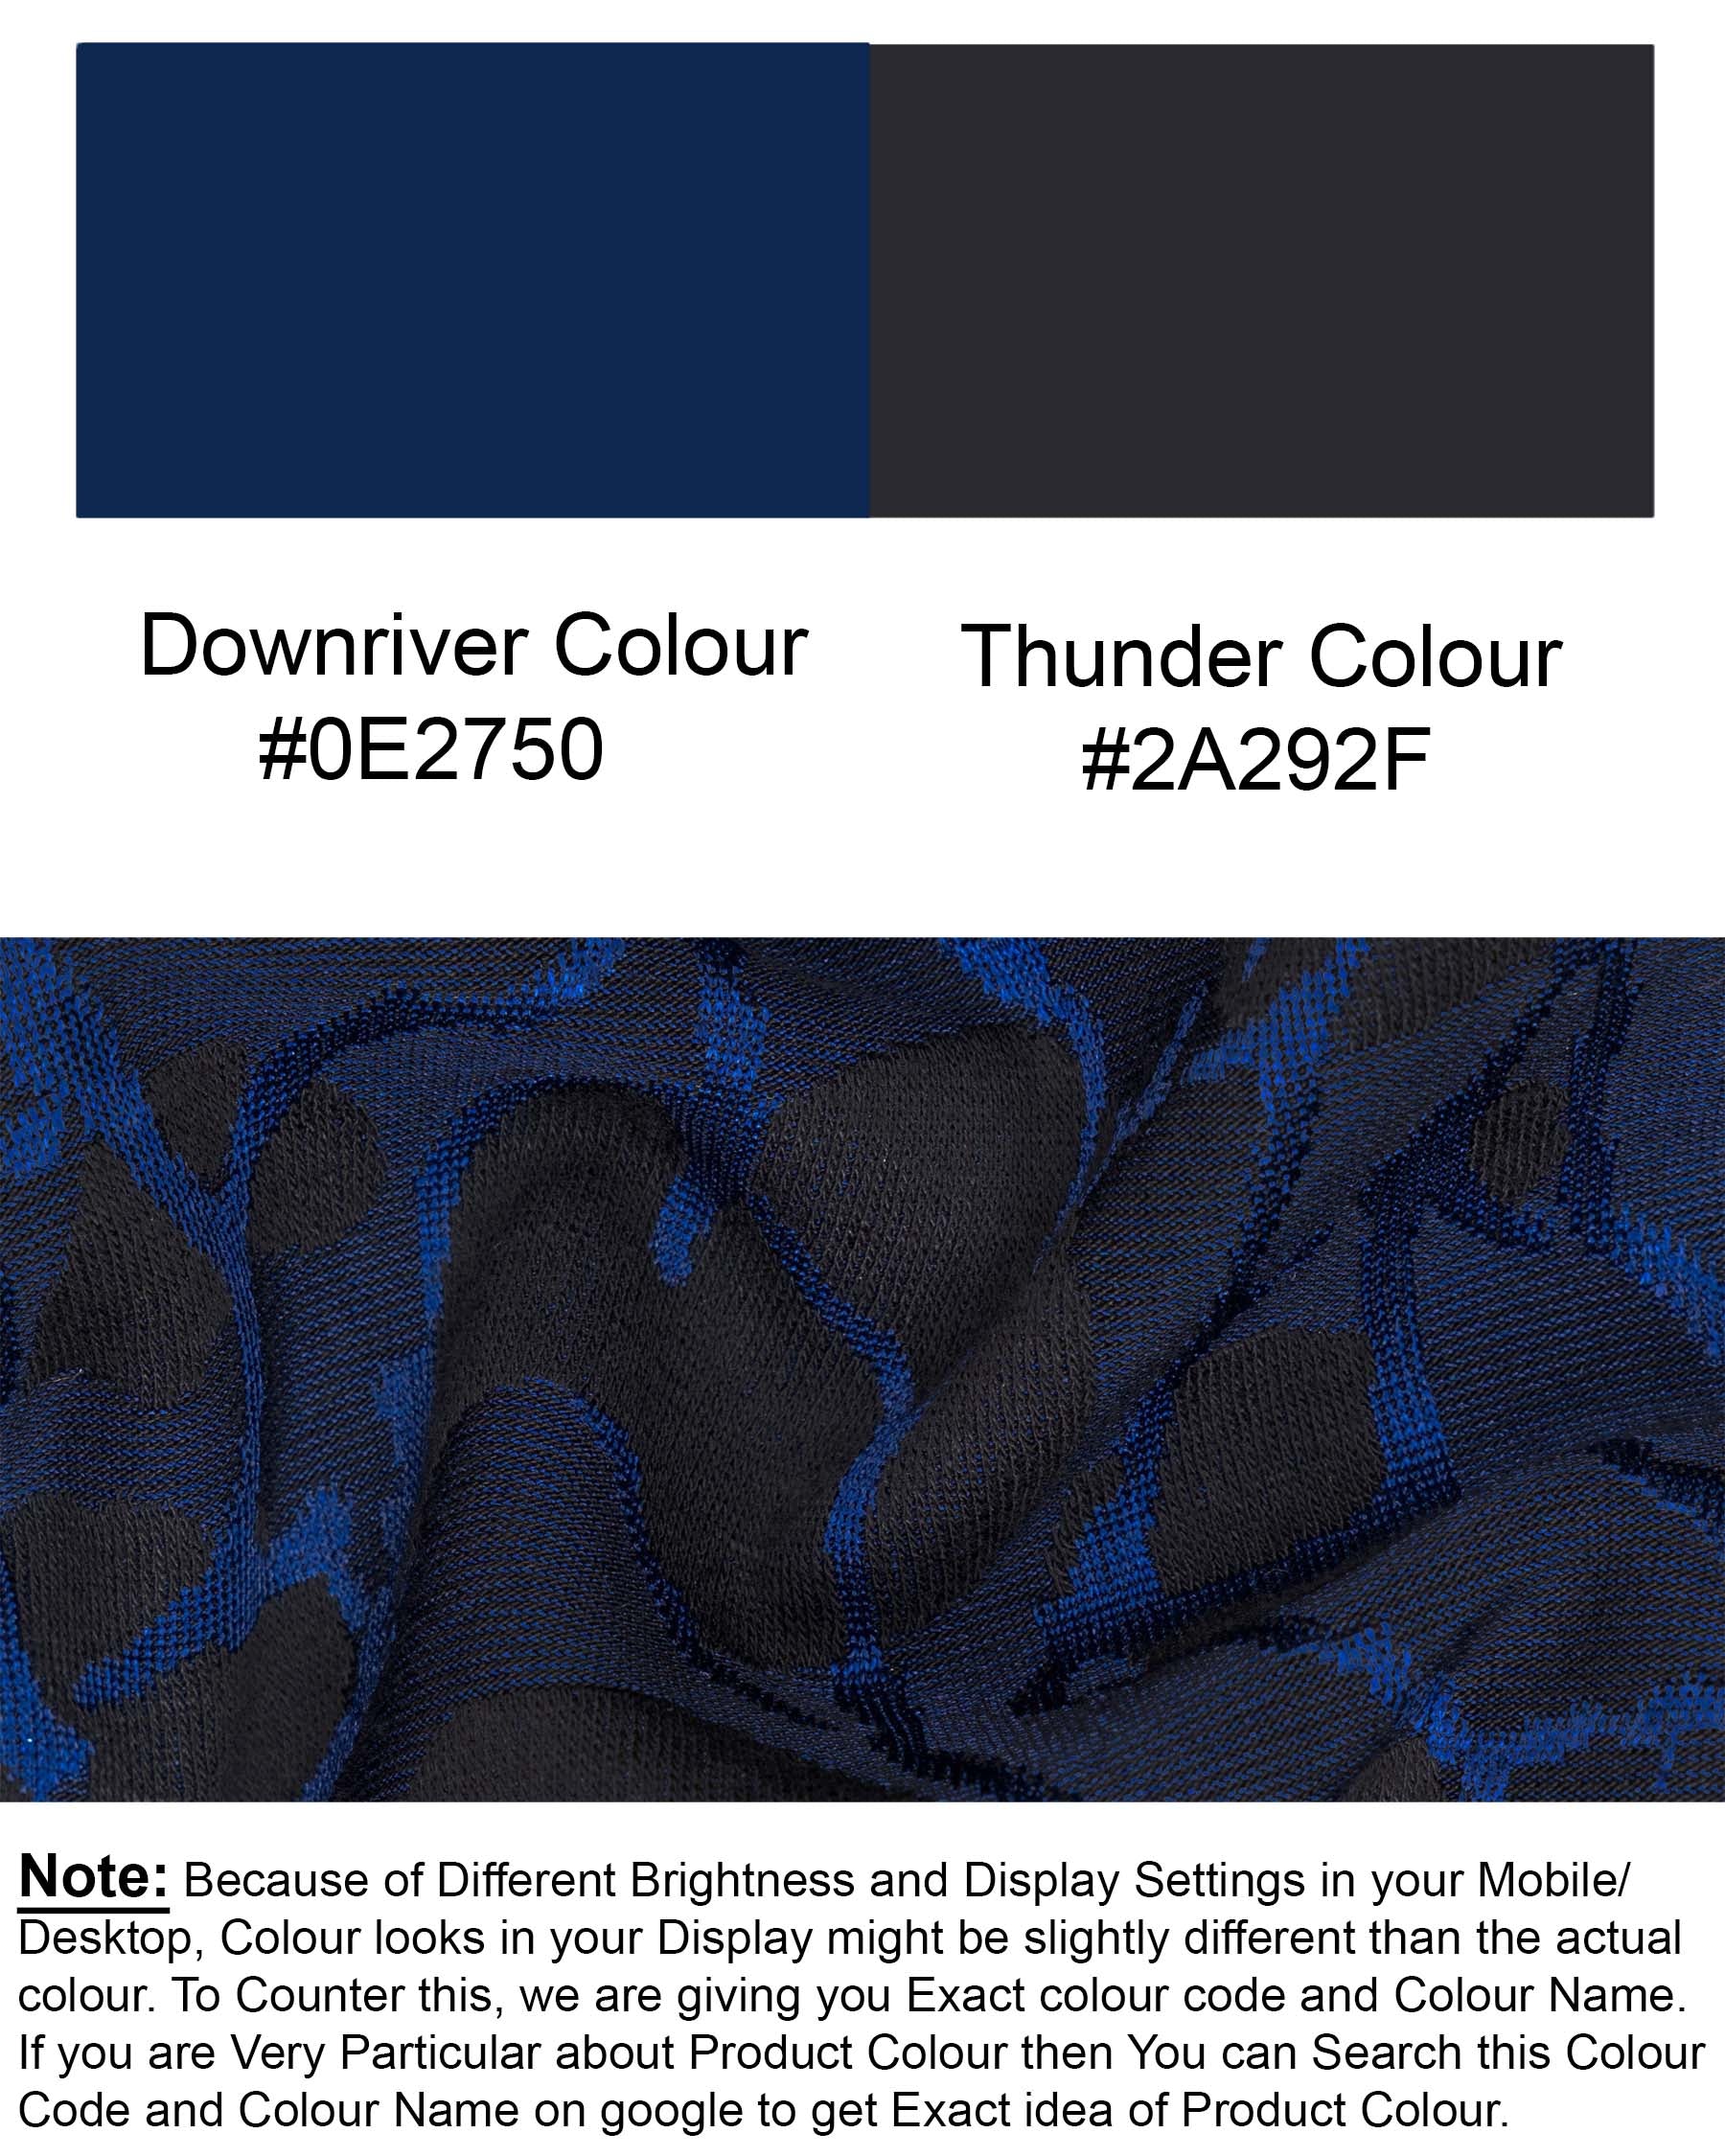 Downriver Blue with Thunder Black Tuxedo Designer Suit ST1798-BKL-36, ST1798-BKL-38, ST1798-BKL-40, ST1798-BKL-42, ST1798-BKL-44, ST1798-BKL-46, ST1798-BKL-48, ST1798-BKL-50, ST1798-BKL-52, ST1798-BKL-54, ST1798-BKL-56, ST1798-BKL-58, ST1798-BKL-60